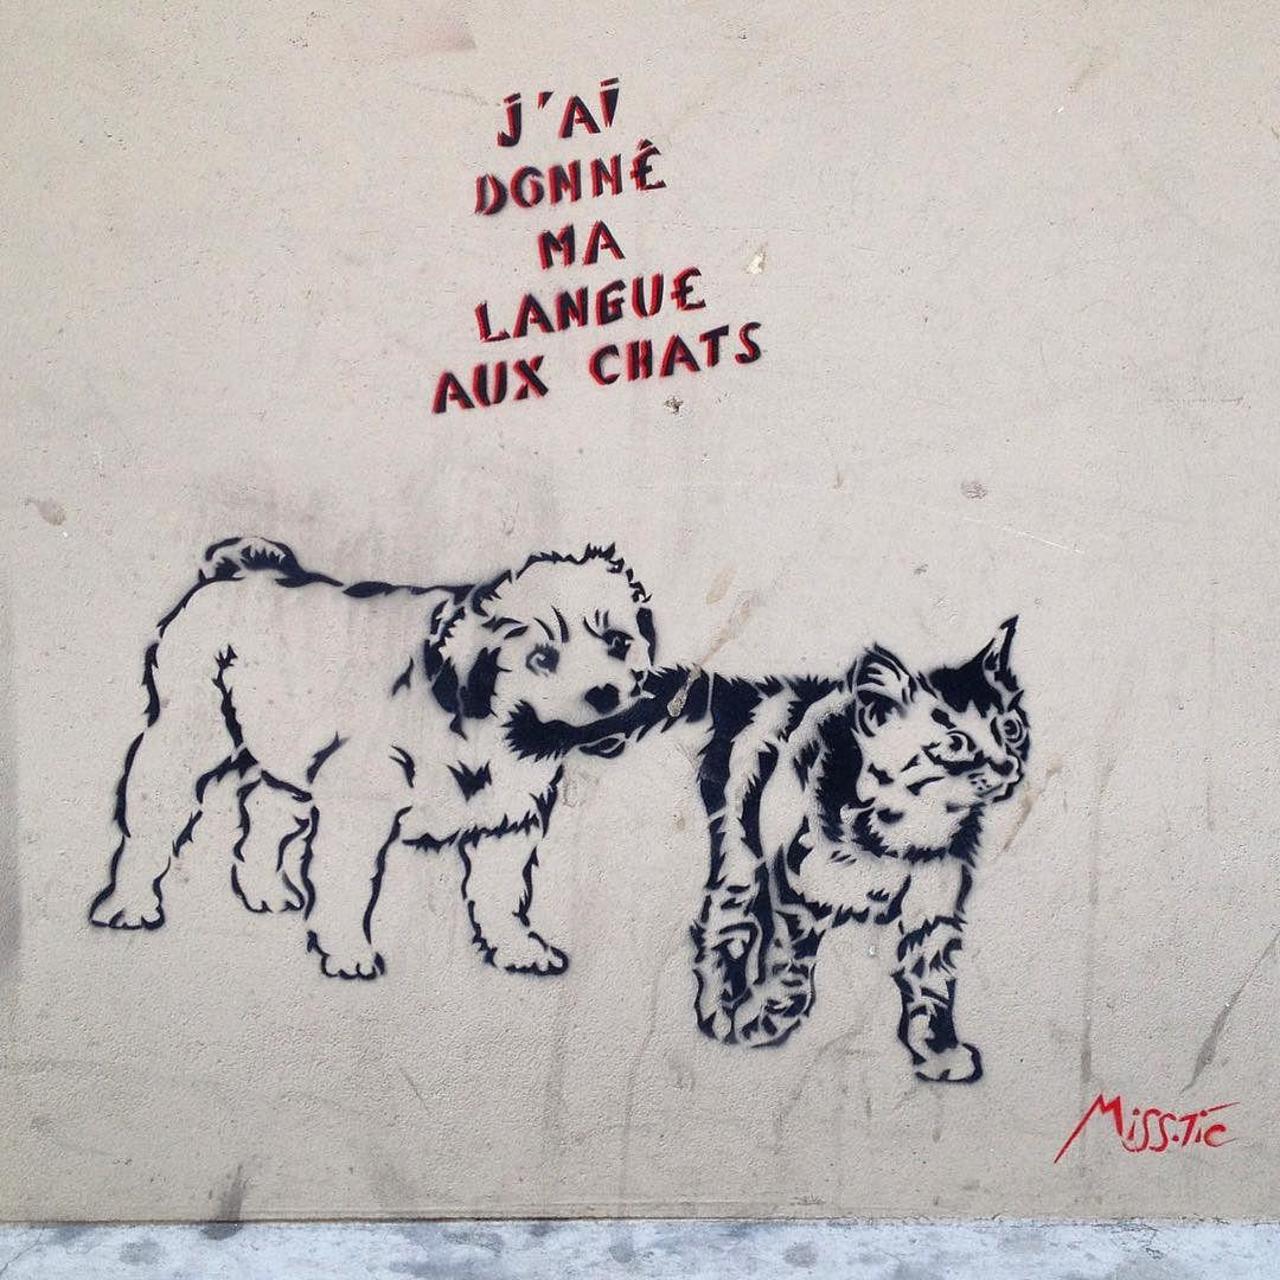 #Paris #graffiti photo by @benapix http://ift.tt/1KZJNQt #StreetArt http://t.co/EaJwM3DXuY